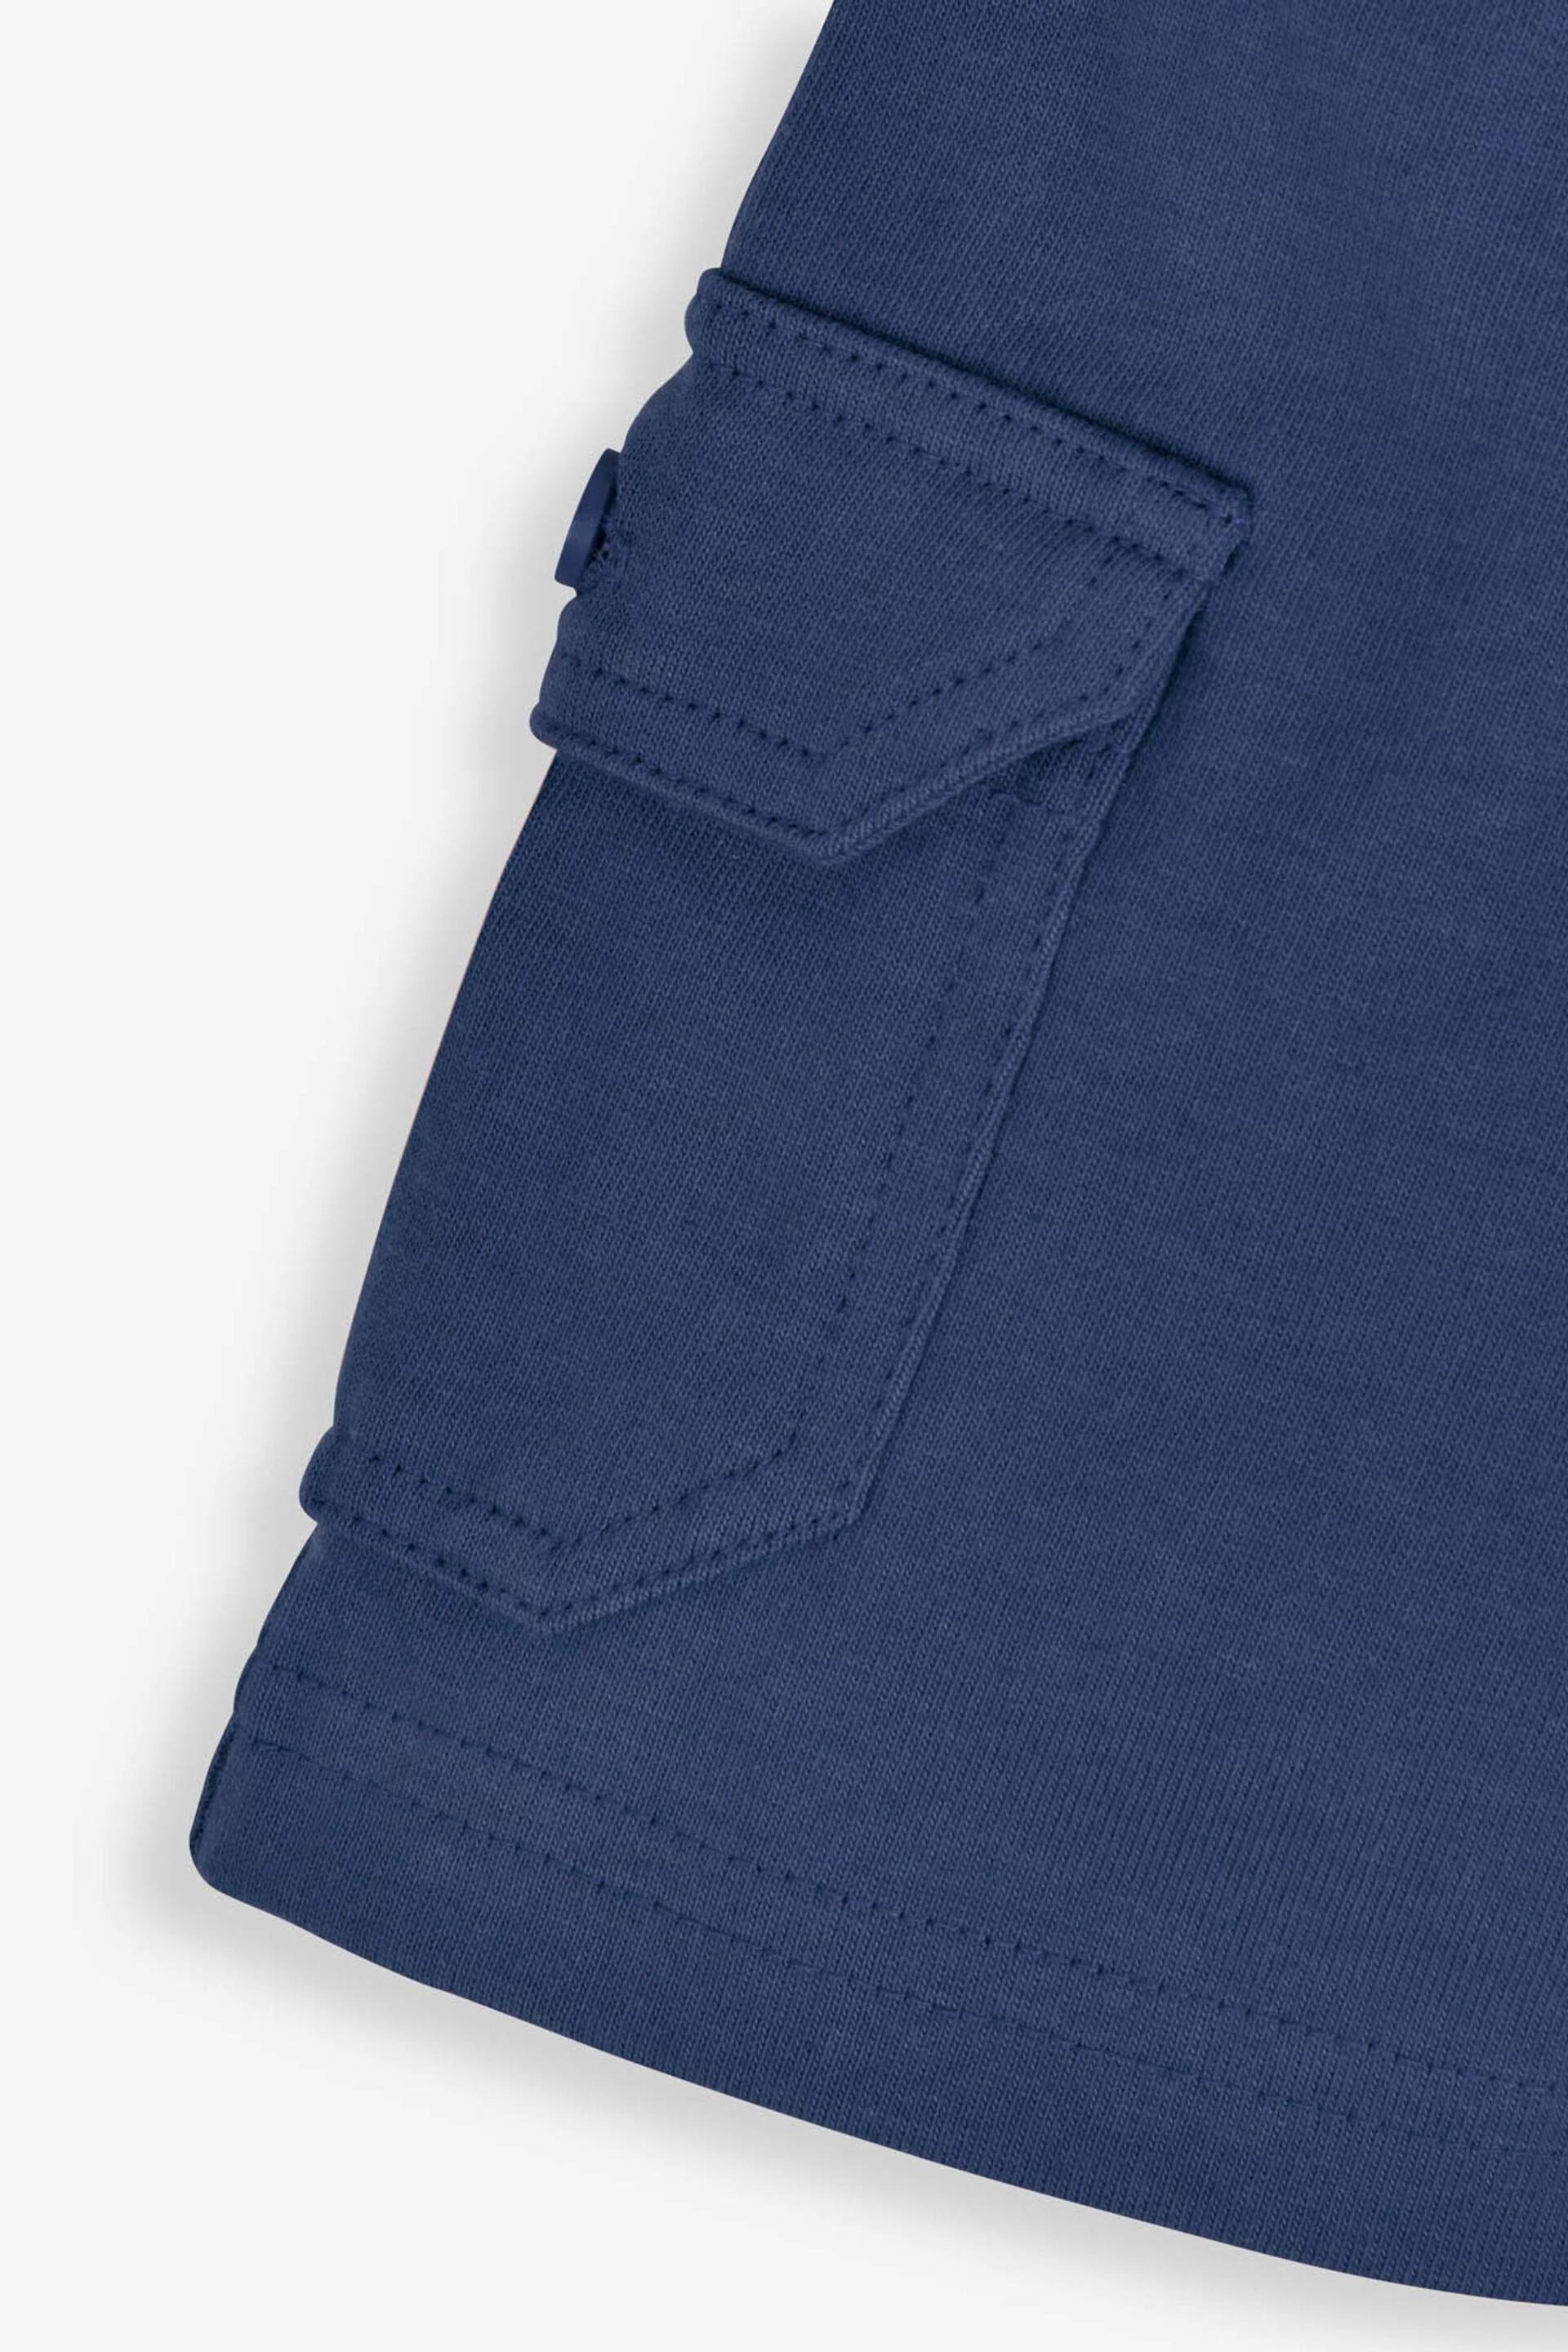 JoJo Maman Bébé Indigo Blue 2-Pack Jersey Cargo Shorts - Image 4 of 6